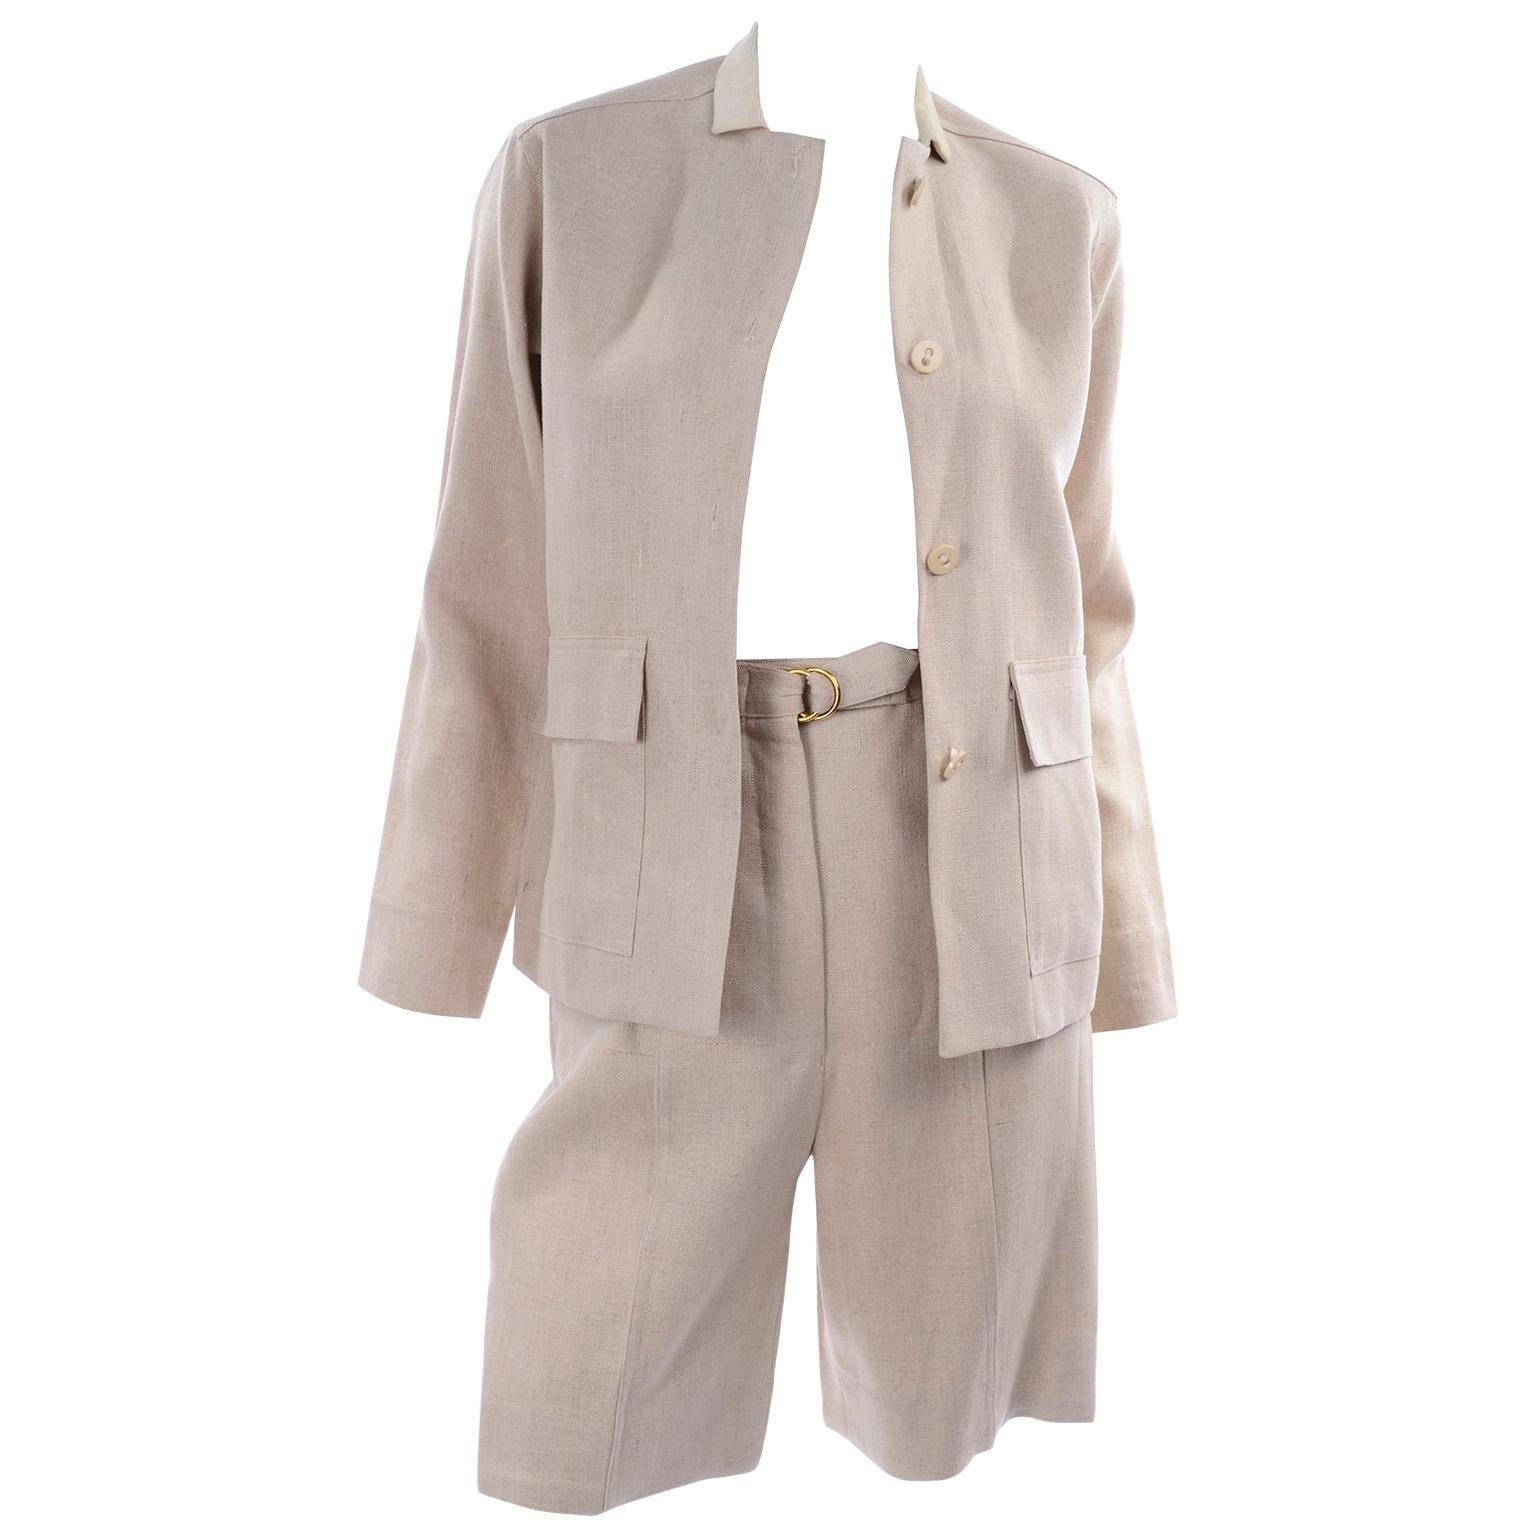 1950s Bill Atkinson Glen of Michigan Tan Linen Jacket & High Rise Shorts Suit 